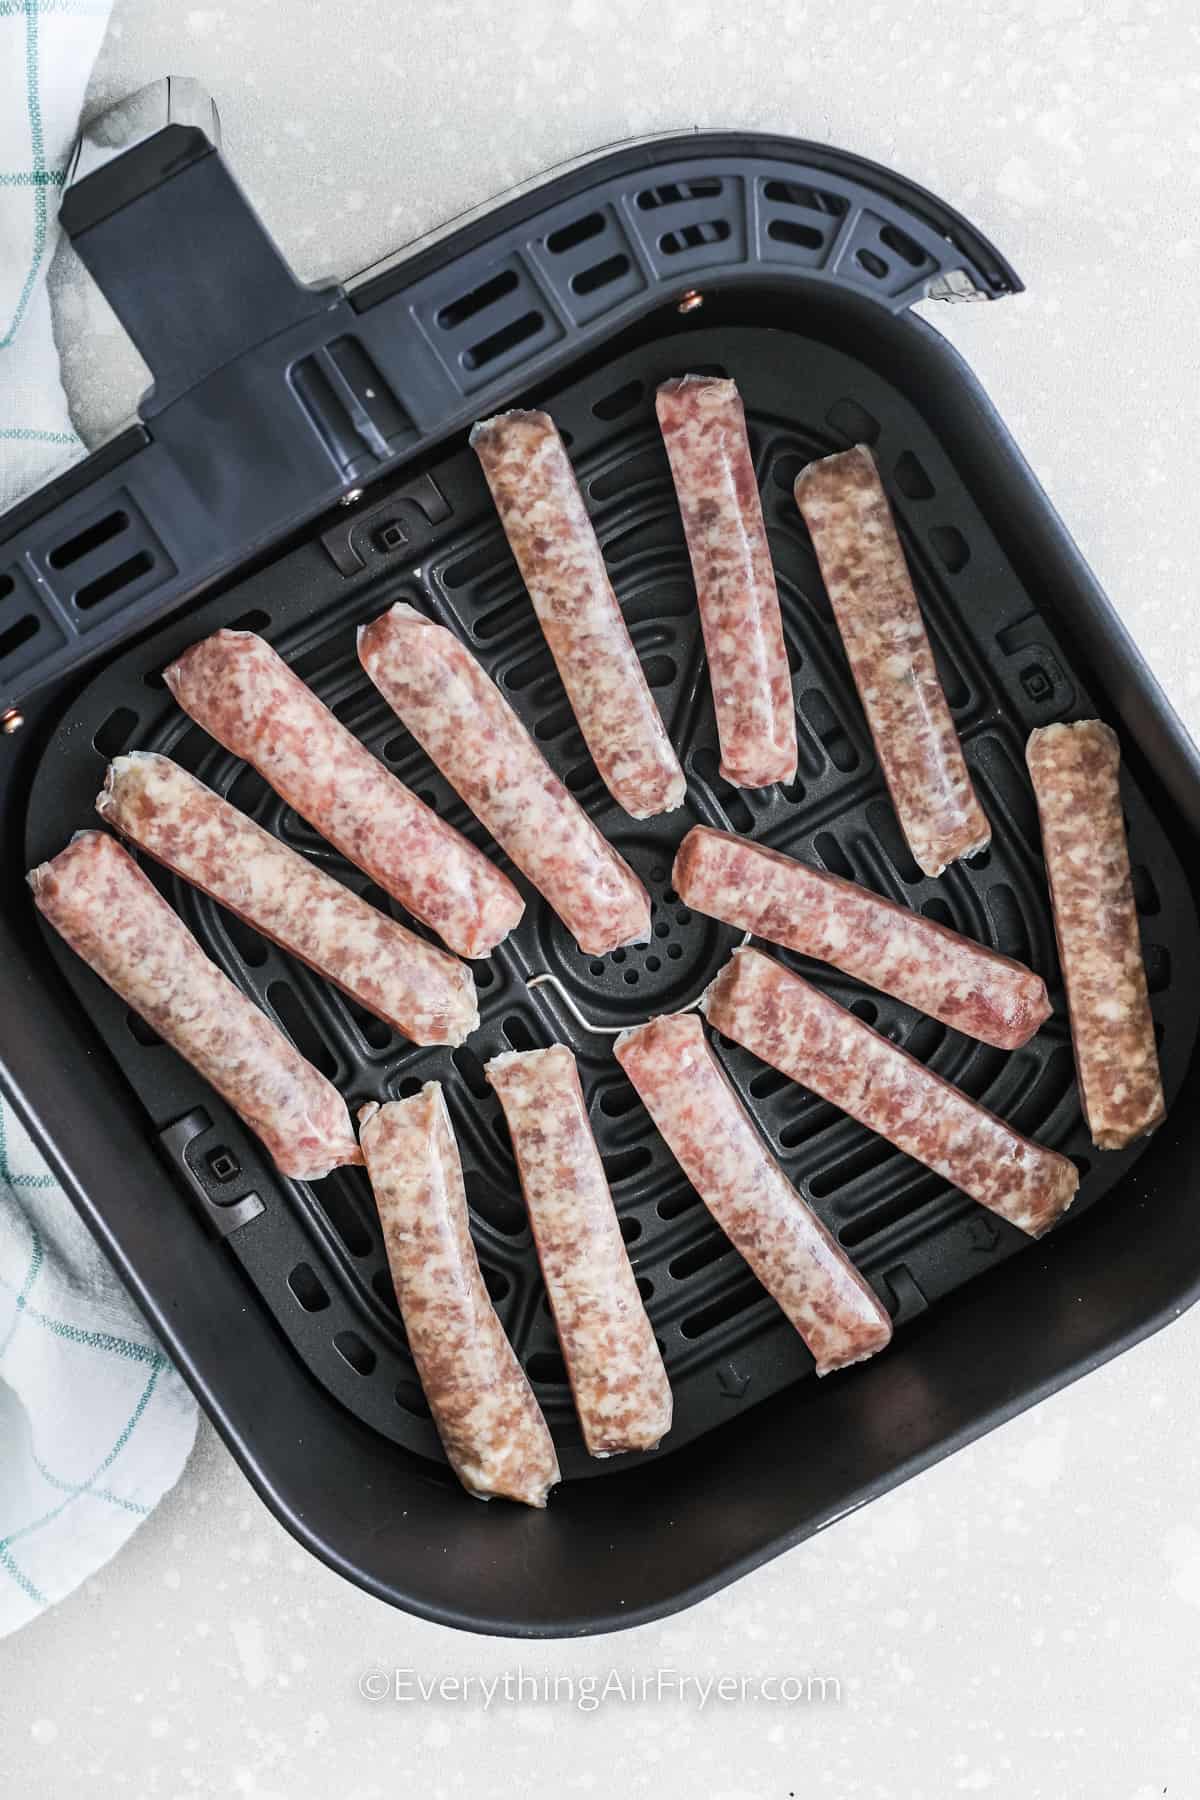 raw breakfast sausages in an air fryer basket for Air Fryer Breakfast Sausages